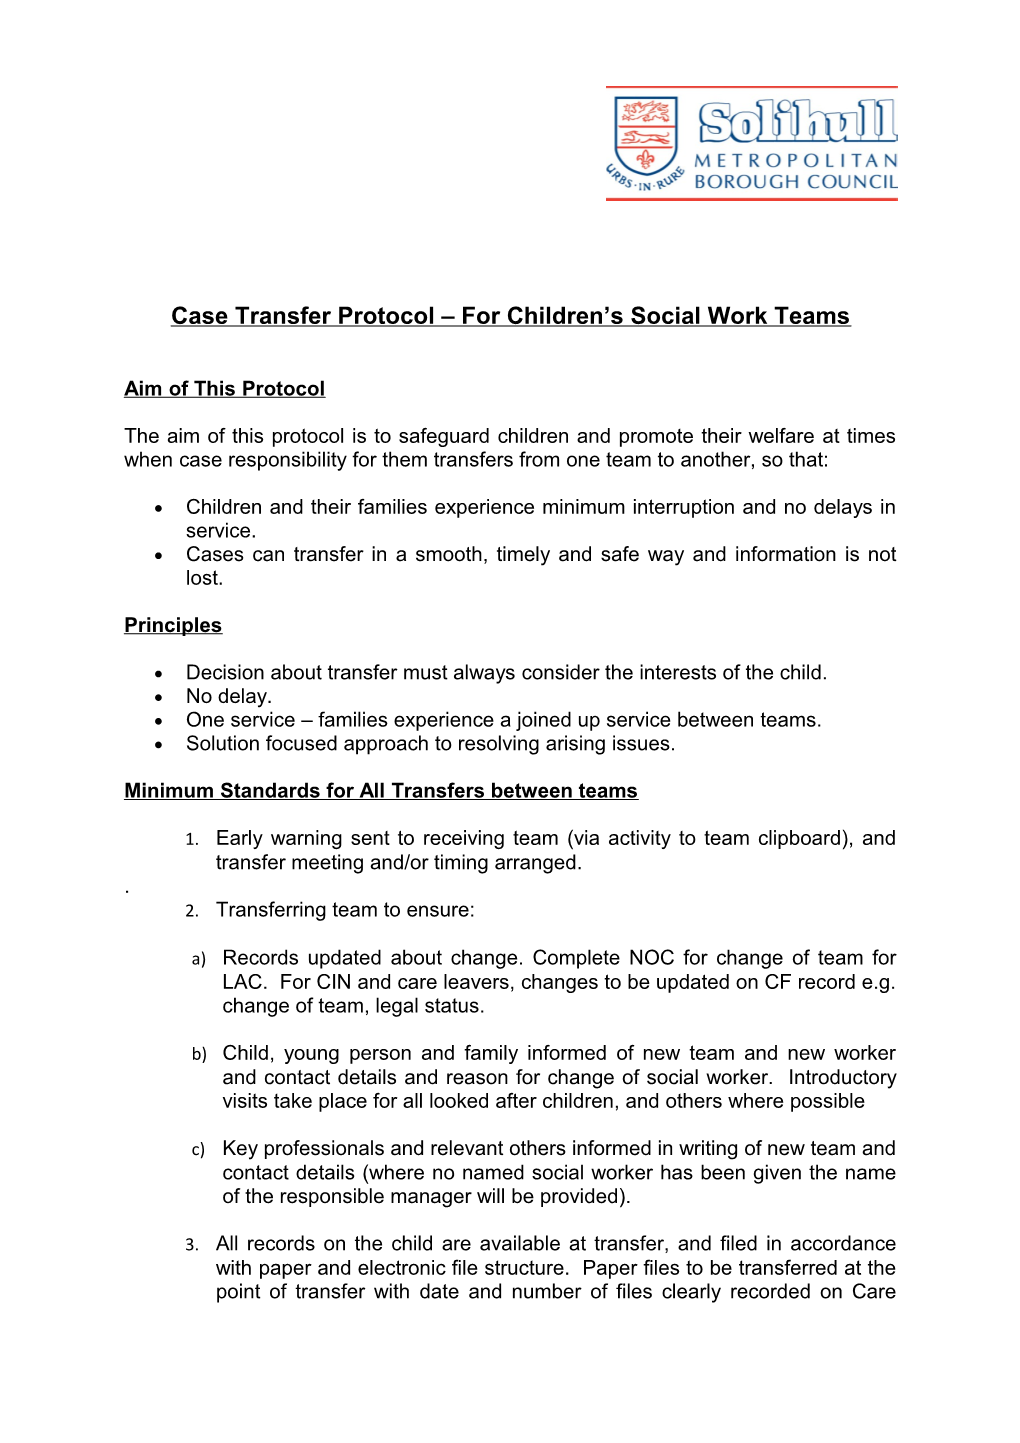 Case Transfer Protocol for Children S Social Work Teams